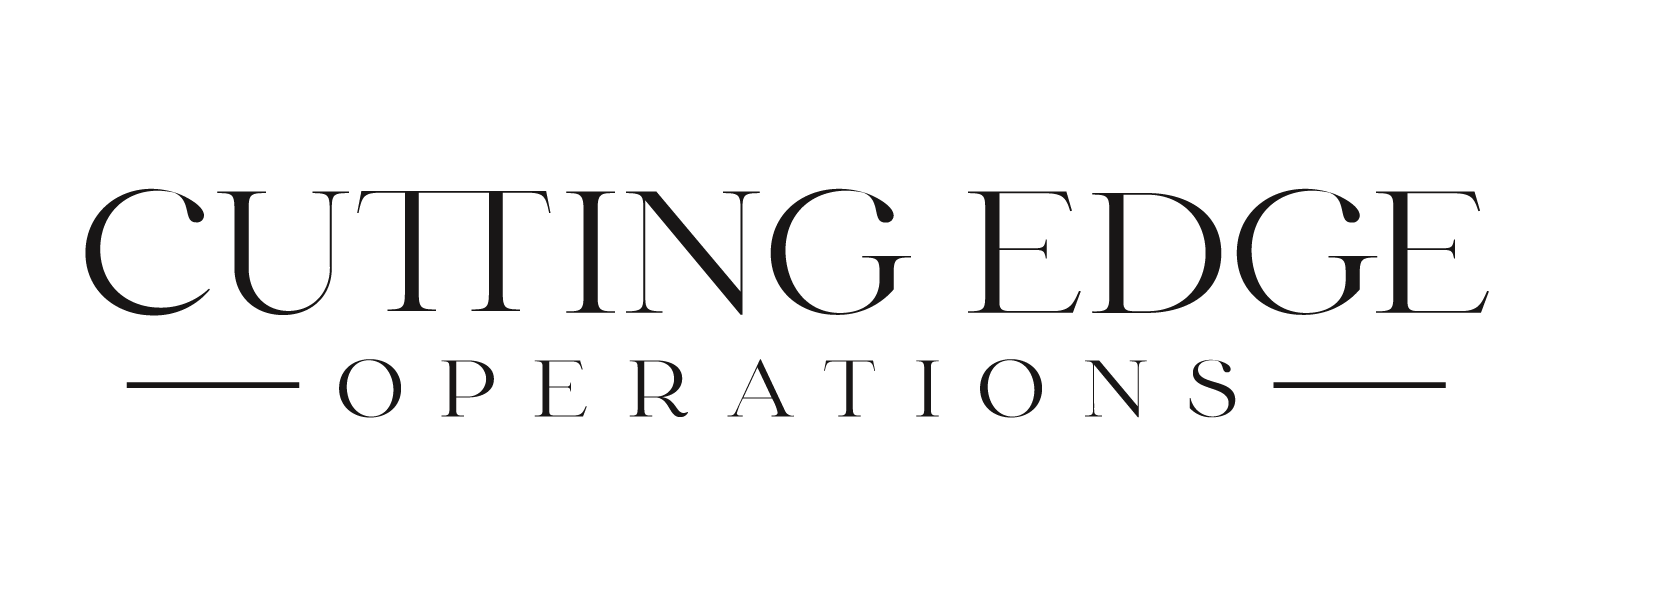 Cutting edge operations co logo